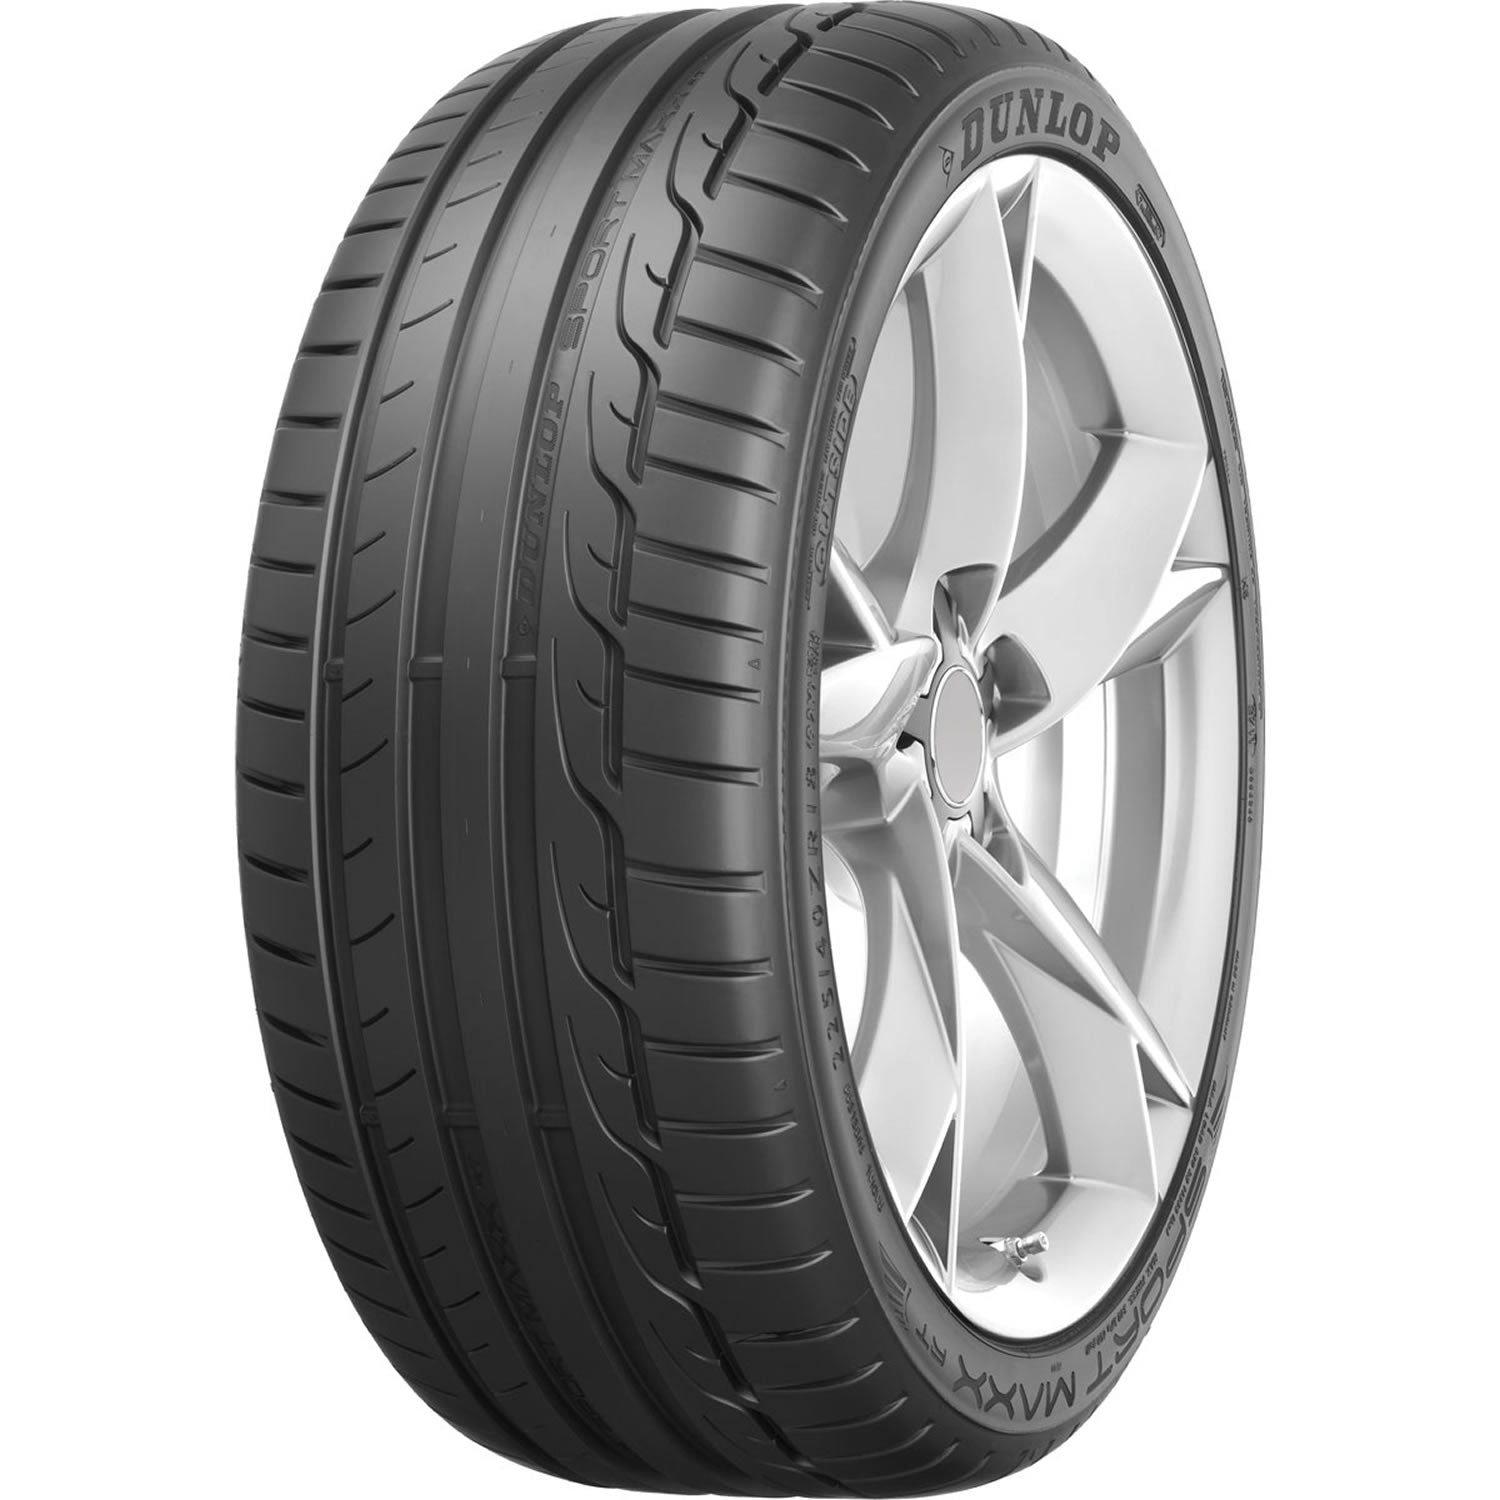 DUNLOP SPORT MAXX RT 235/45R17 (25.4X9.3R 17) Tires